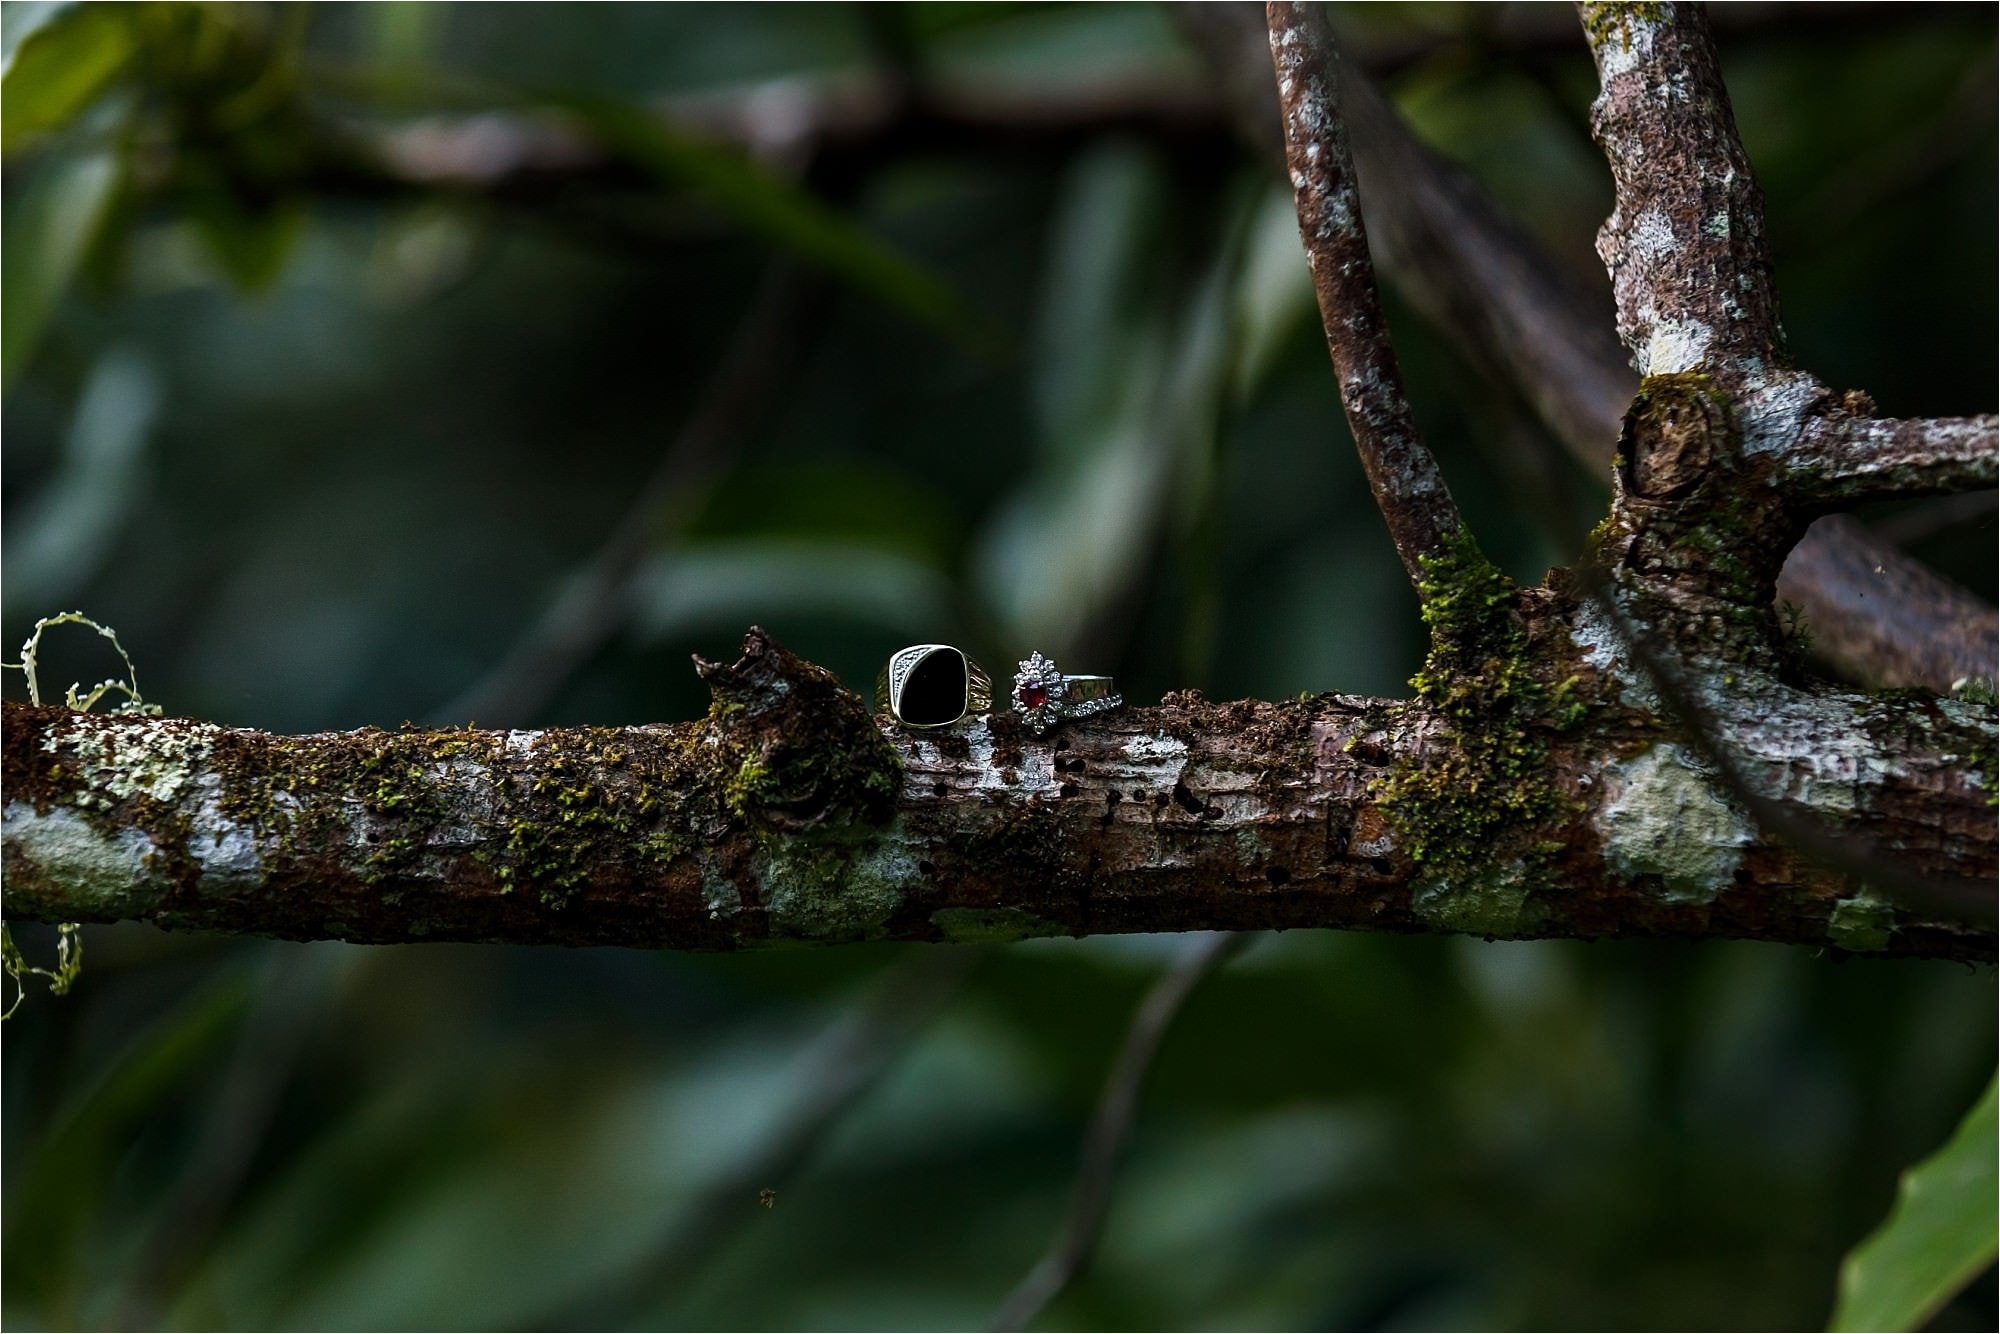 wedding rings in a tree branch at tamborine mountain